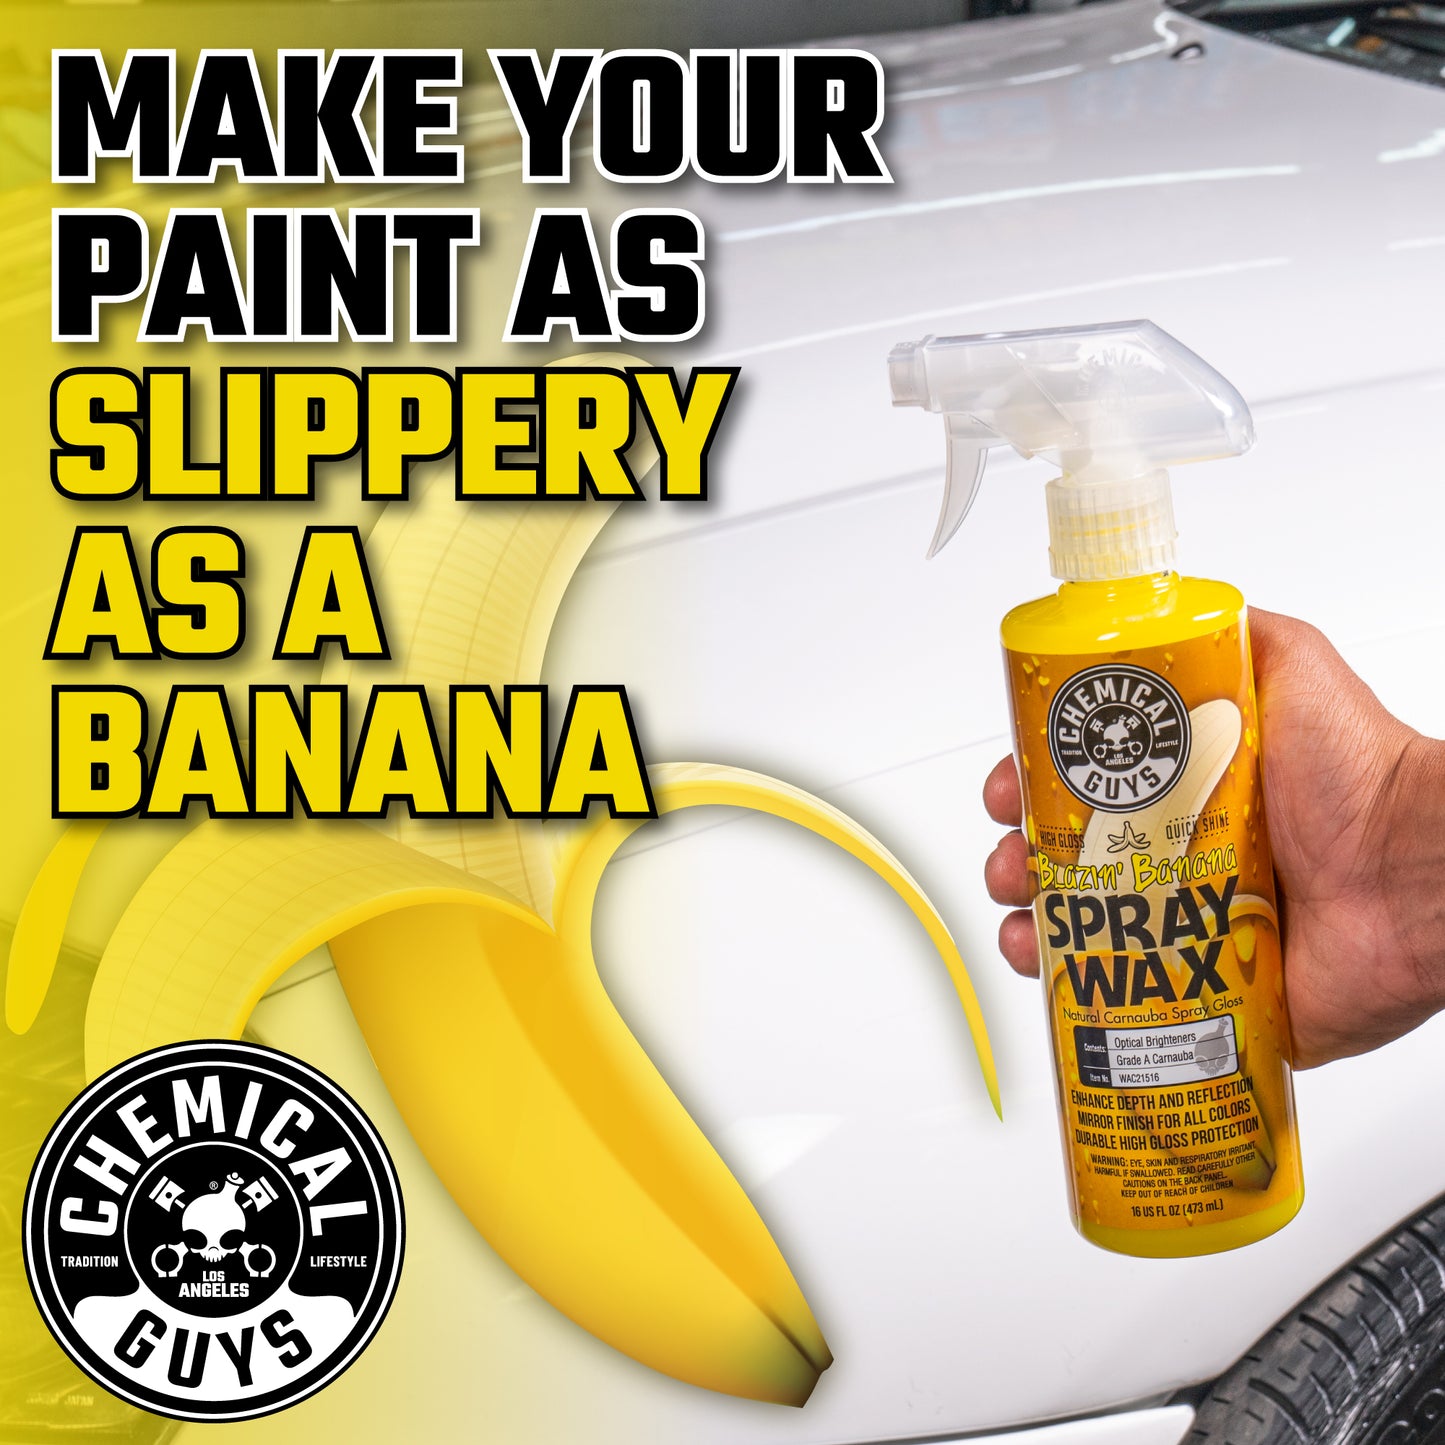 Blazin' Banana Spray Wax